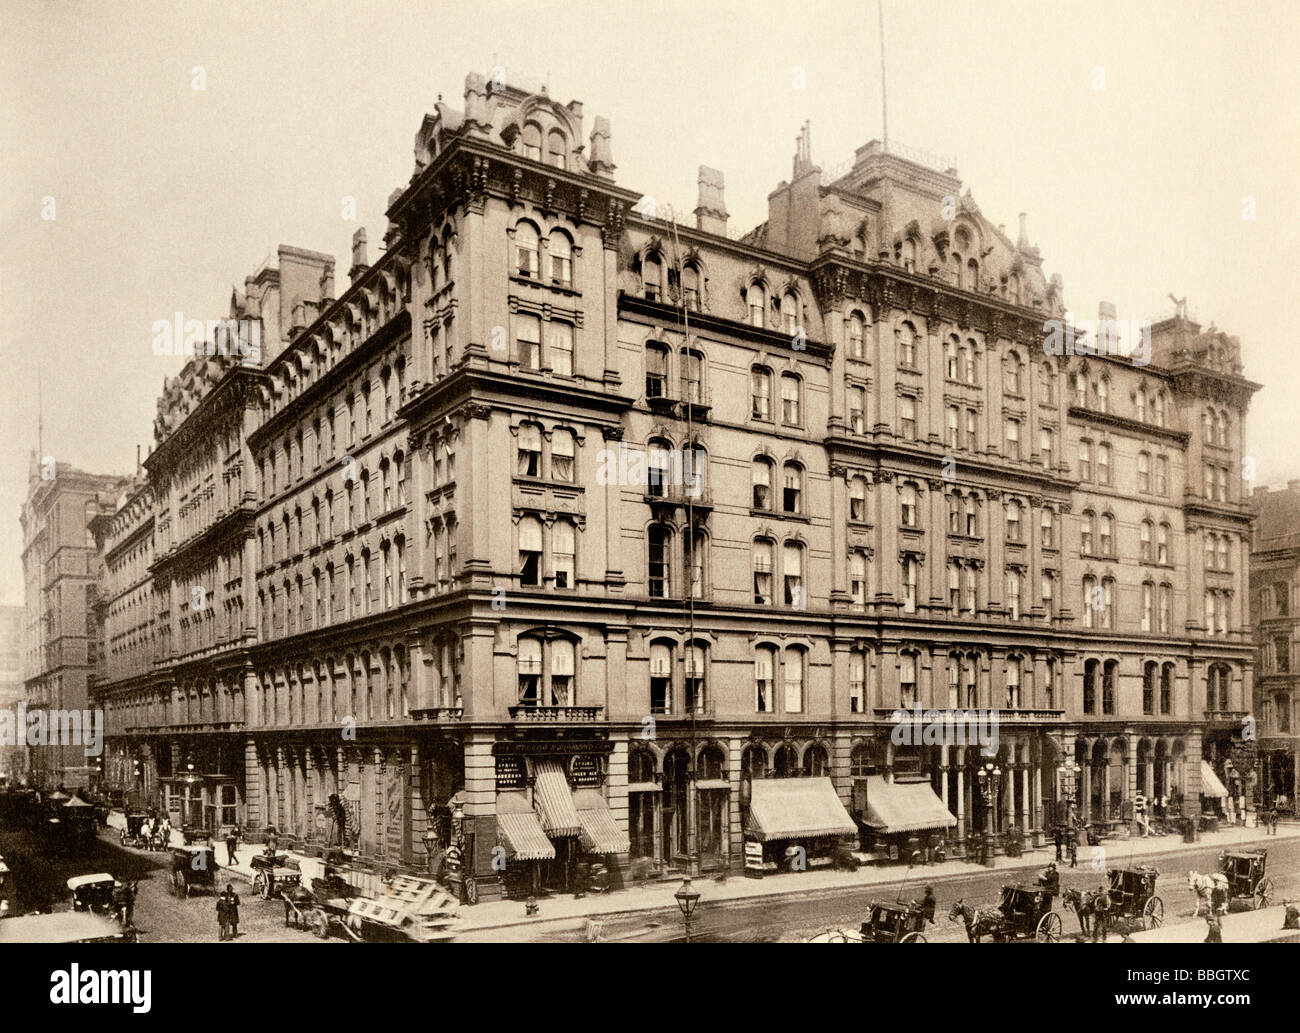 Grand Pacific Hotel in Chicago 1890. Albertype (Foto) Stockfoto